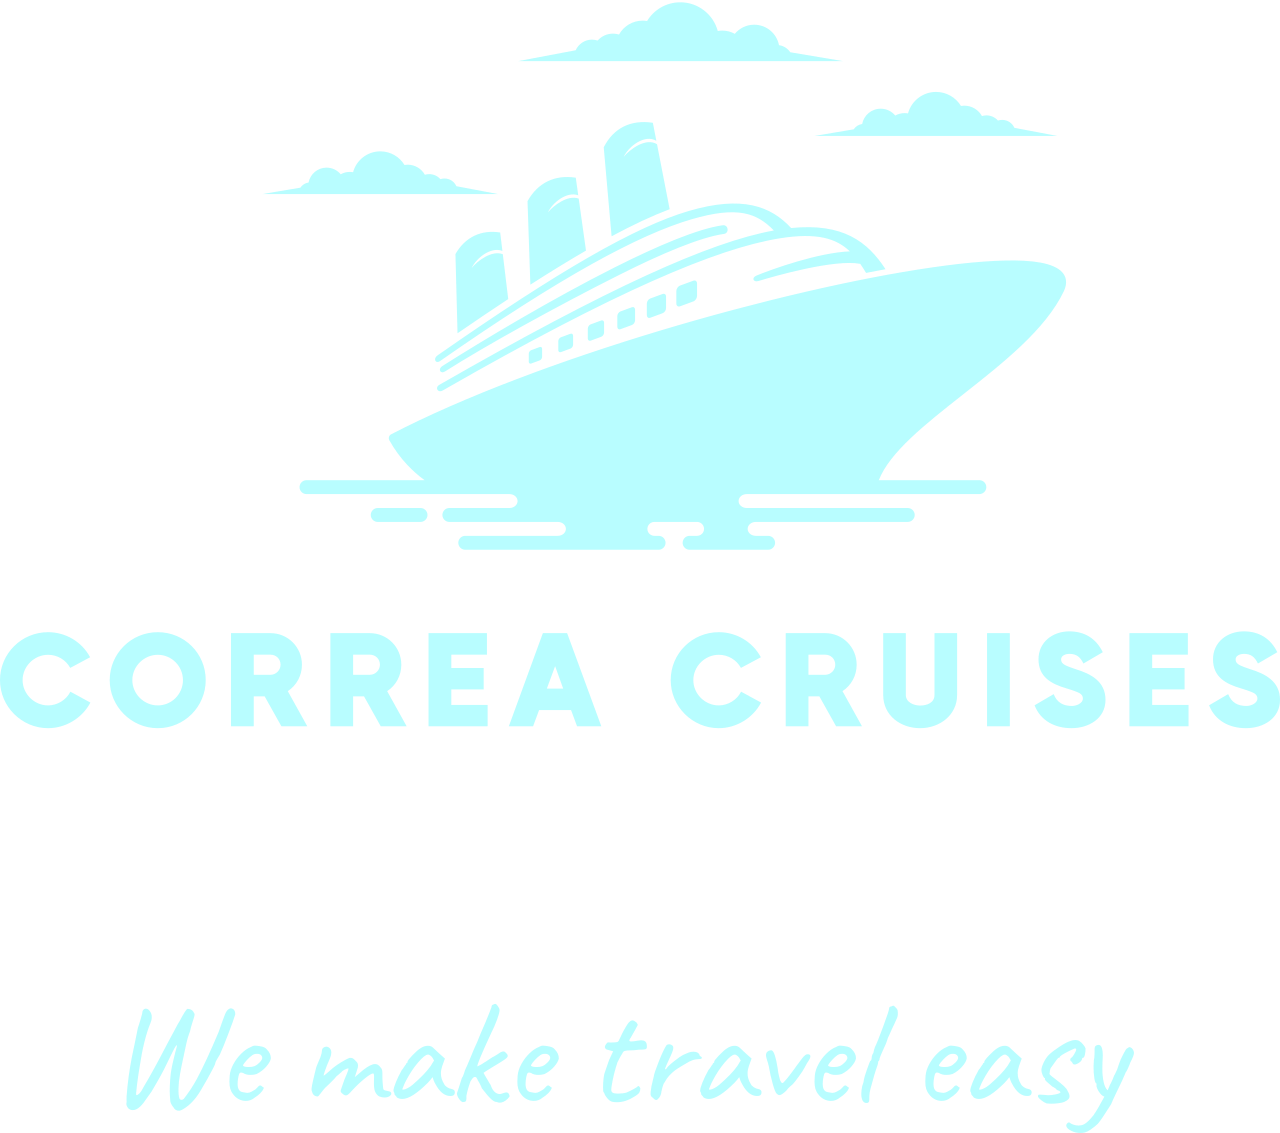 Correa Cruises 's web page